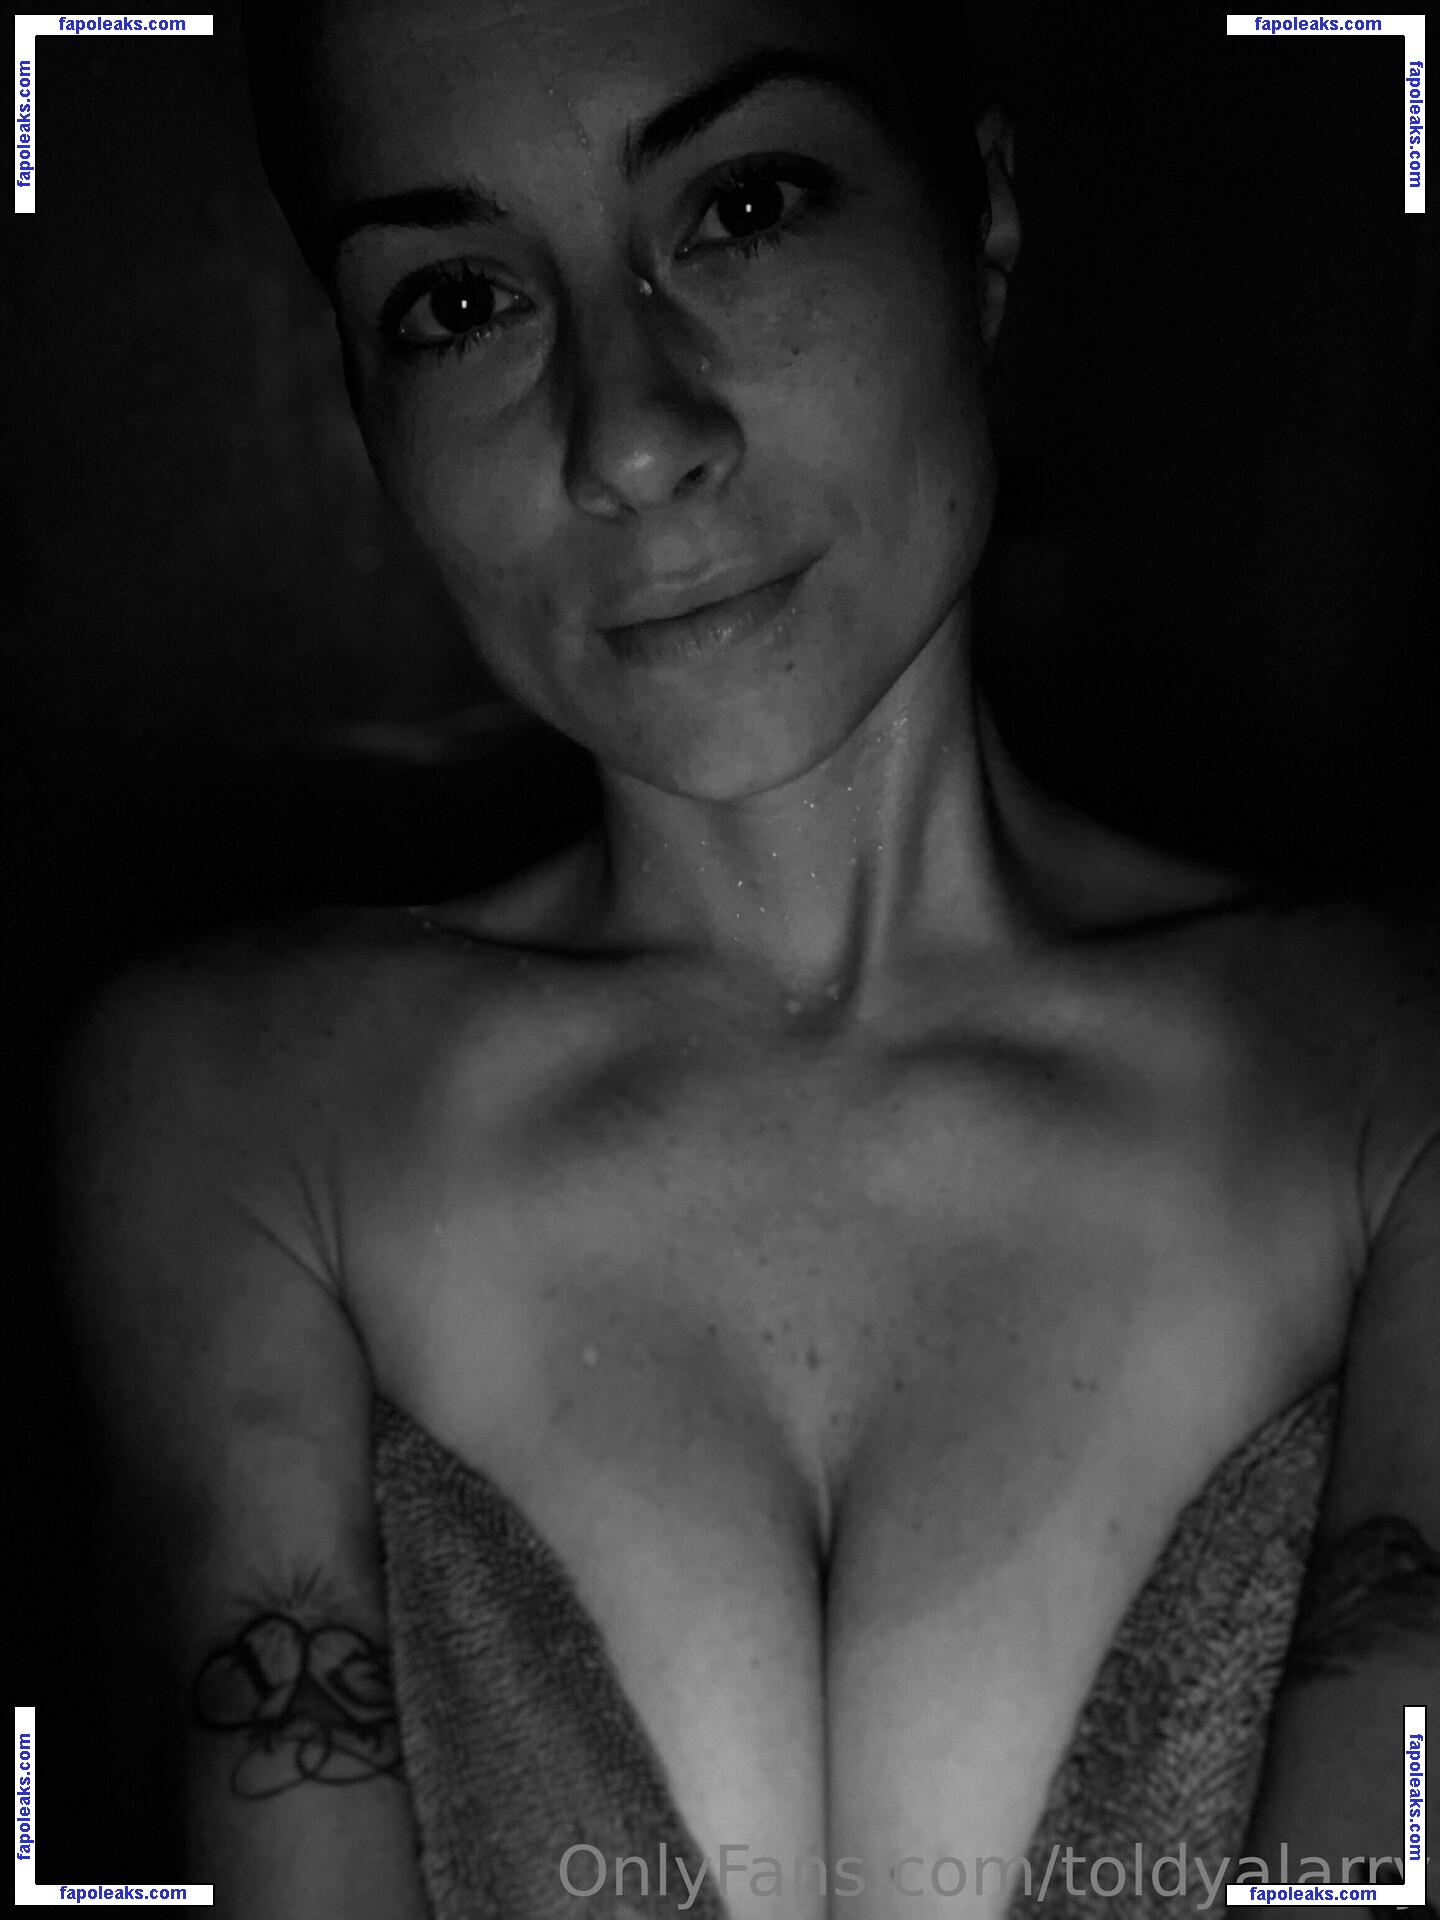 Threefootsix / Nilwob / toldyalarry nude photo #0009 from OnlyFans